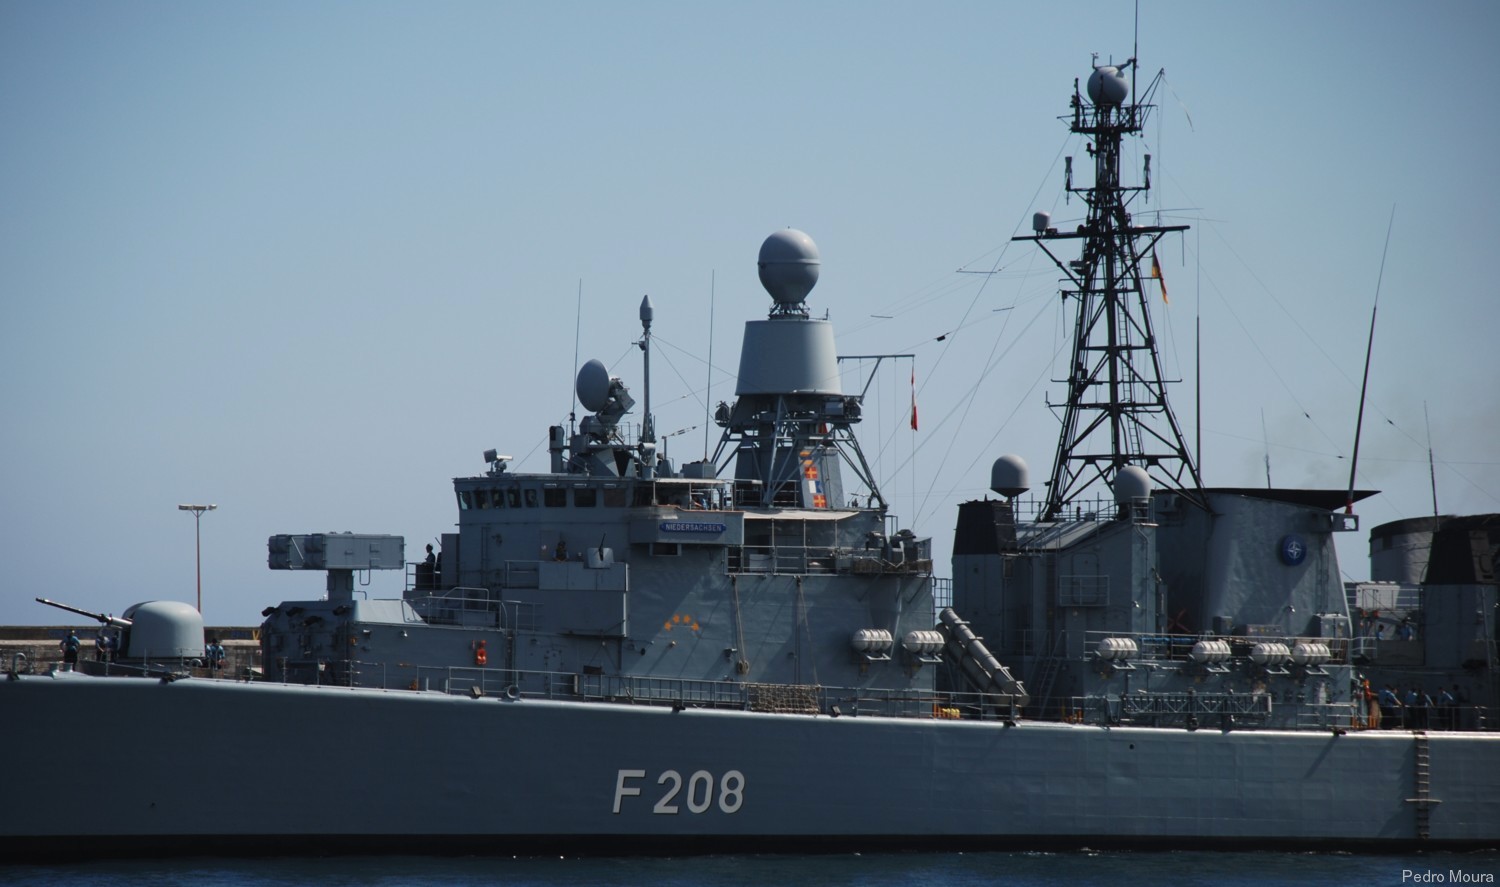 f-208 fgs niedersachsen type 122 bremen class frigate german navy 49 ponta delgada sao miguel azores